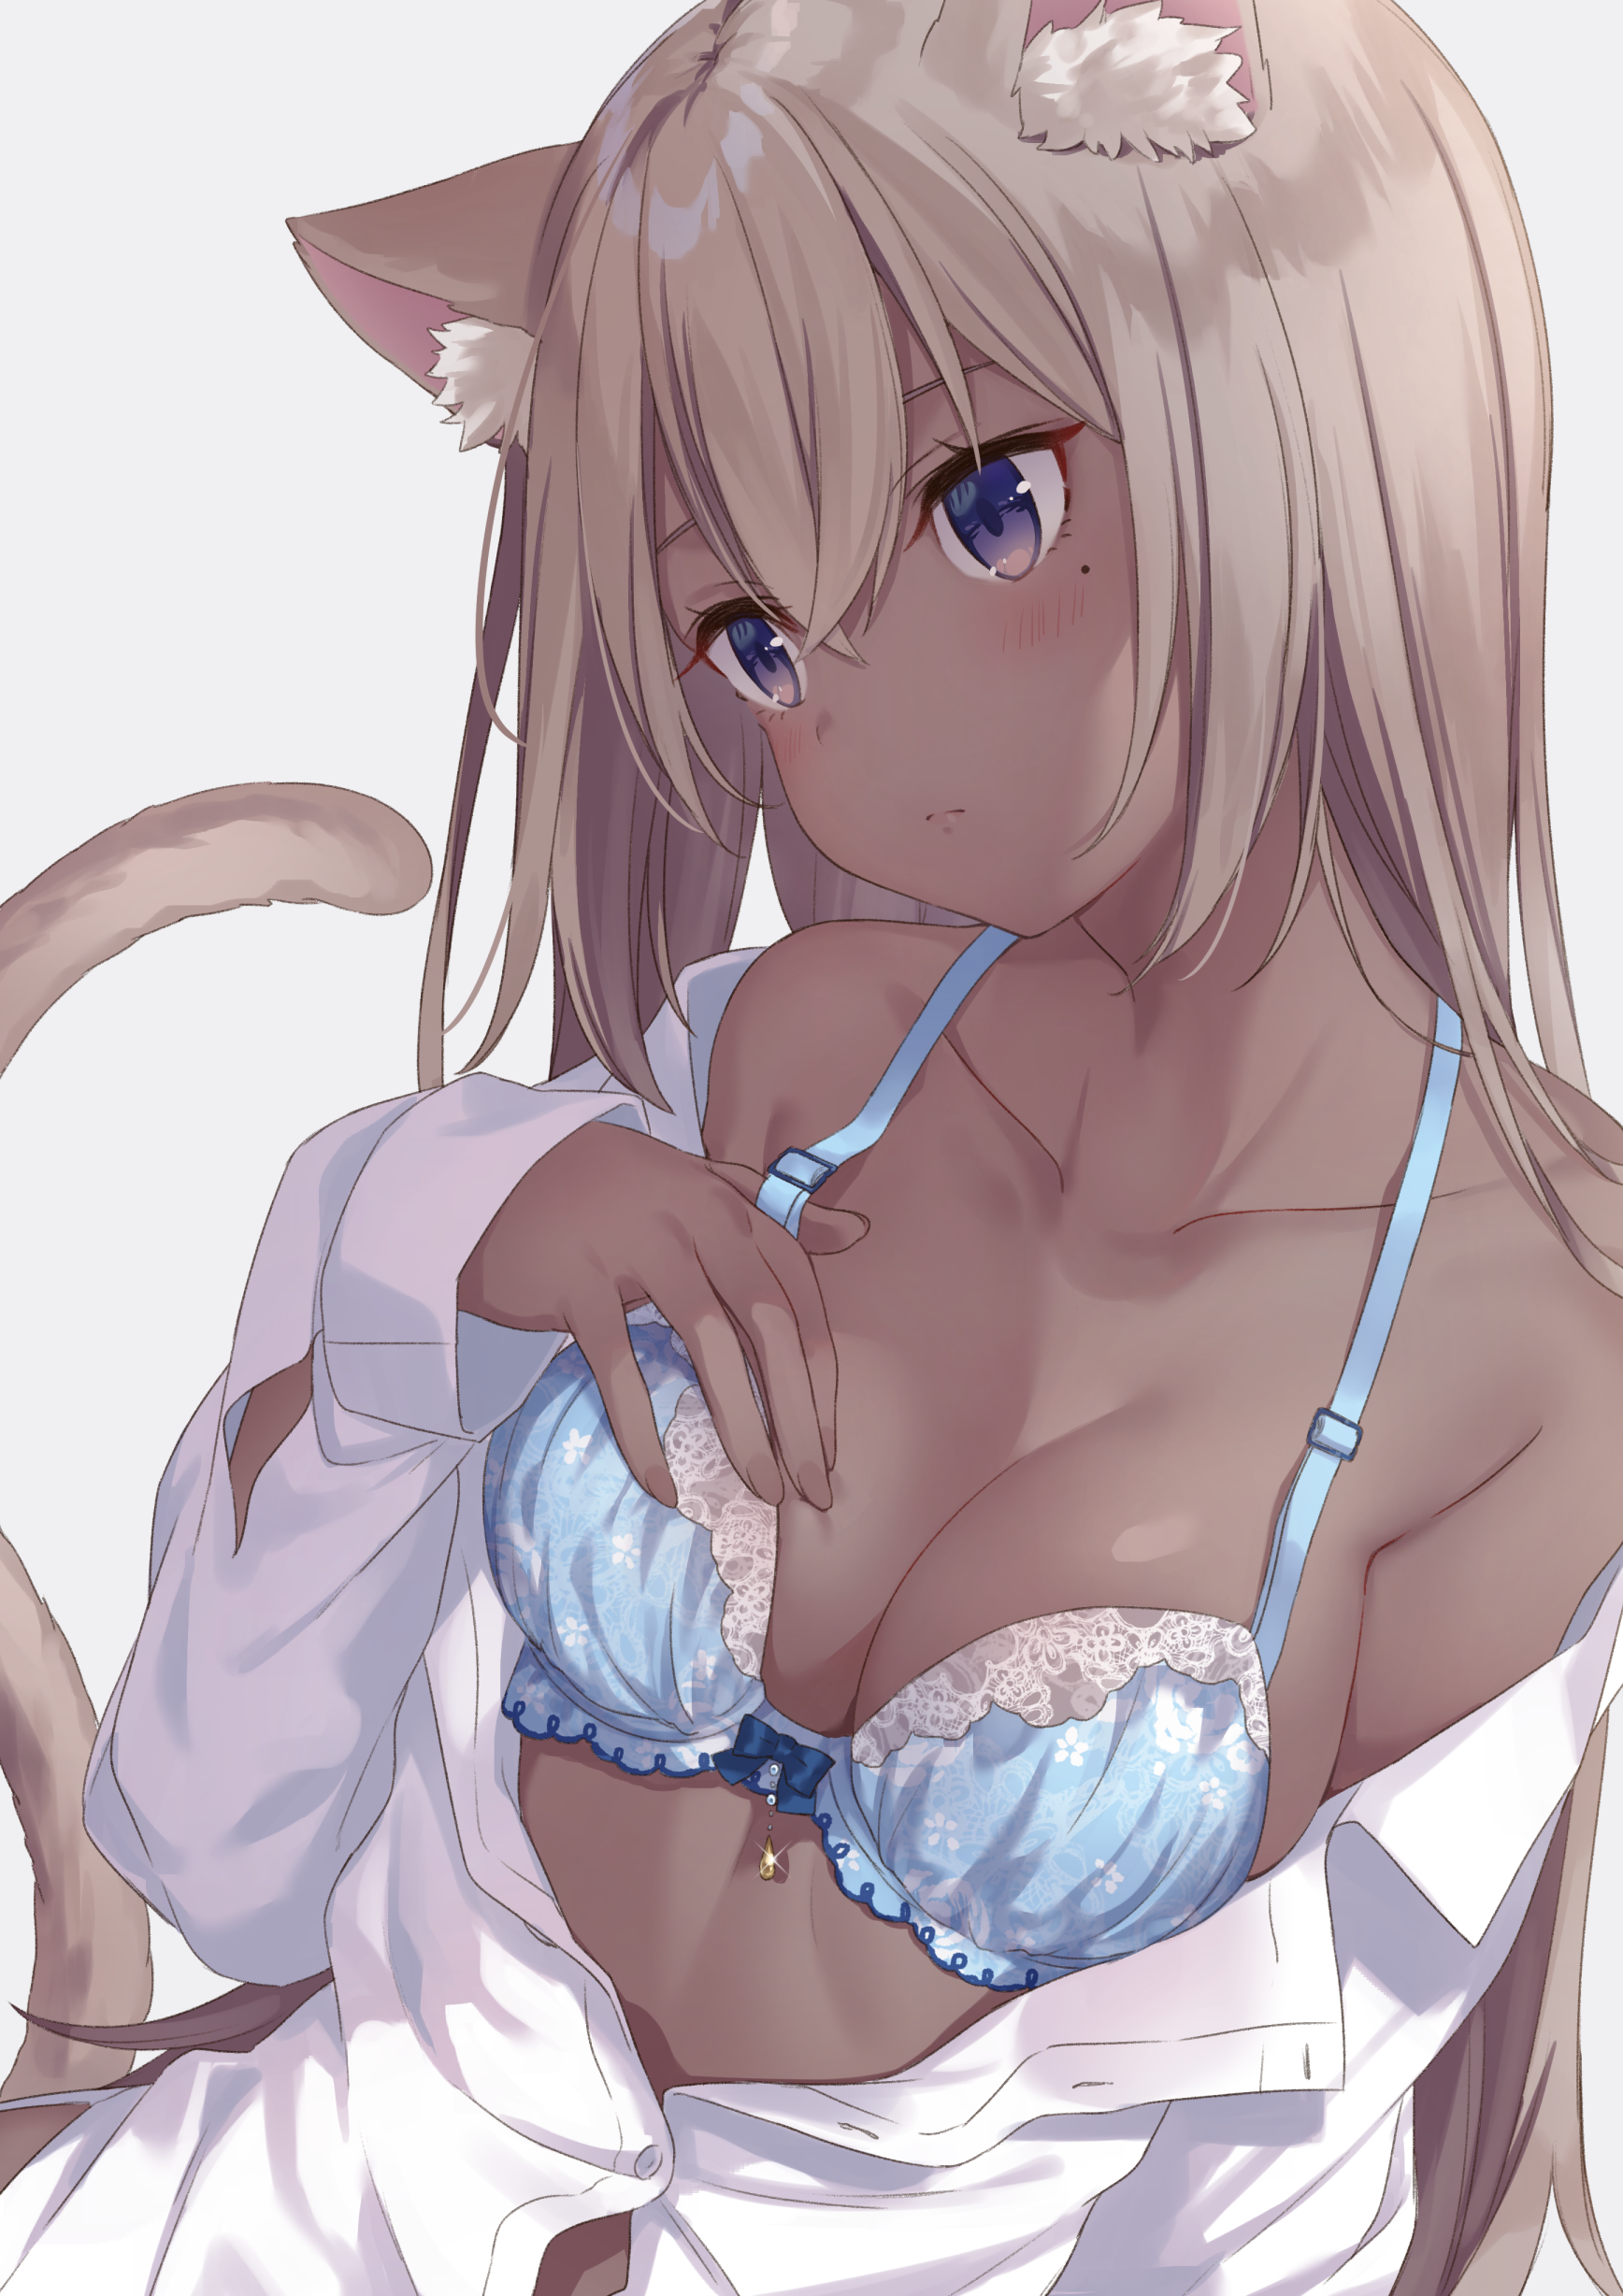 Anime 1736x2456 anime anime girls digital art artwork 2D portrait display Jimmy Madomagi cleavage bra cat girl tail